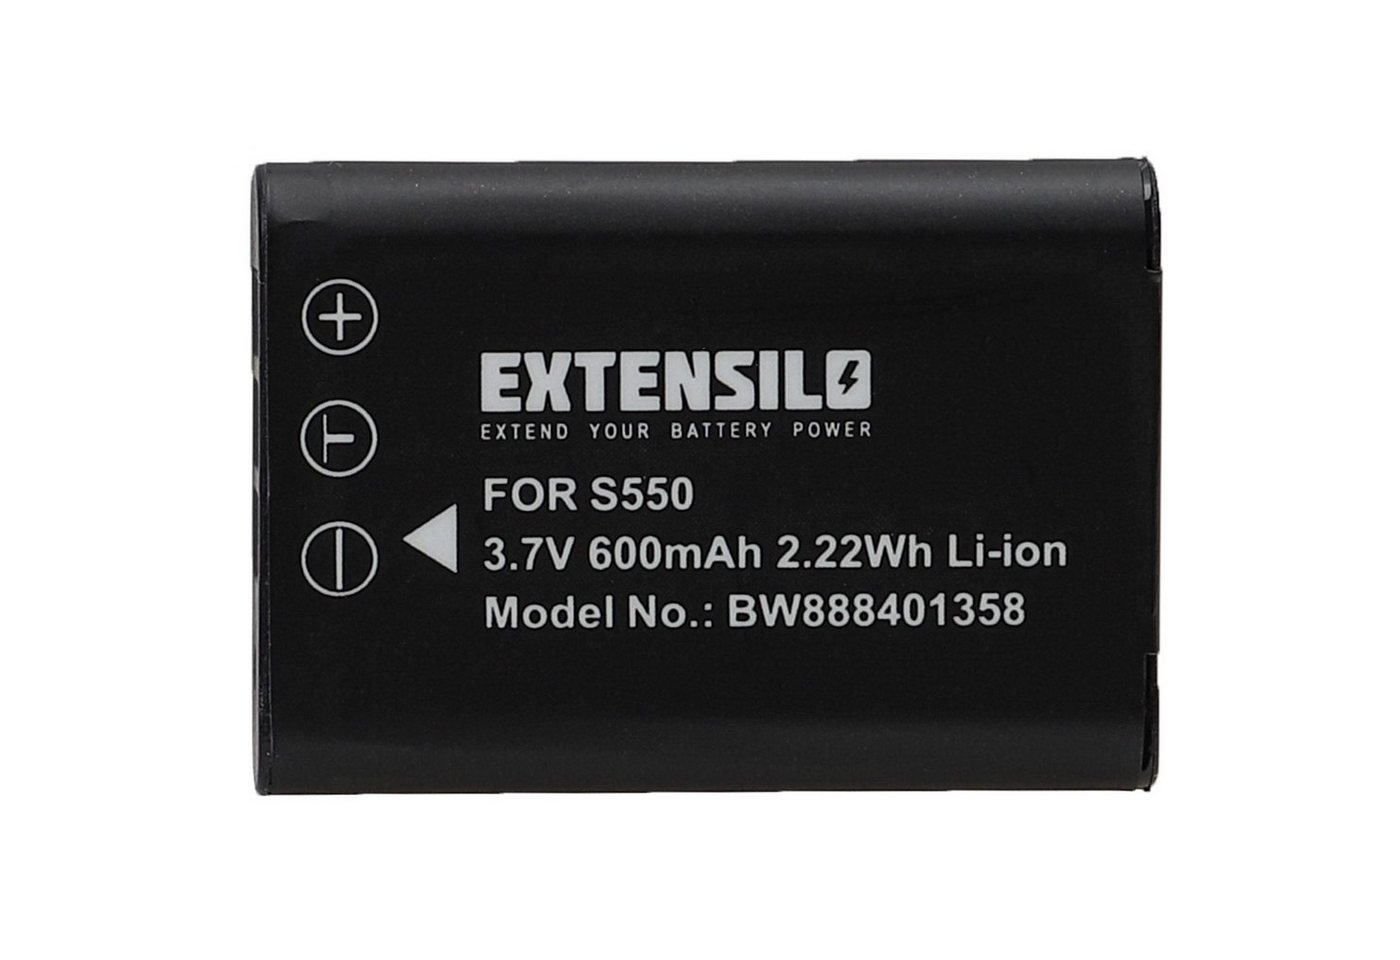 Extensilo kompatibel mit Nikon Coolpix S560, S550 Kamera-Akku Li-Ion 600 mAh (3,7 V) von Extensilo